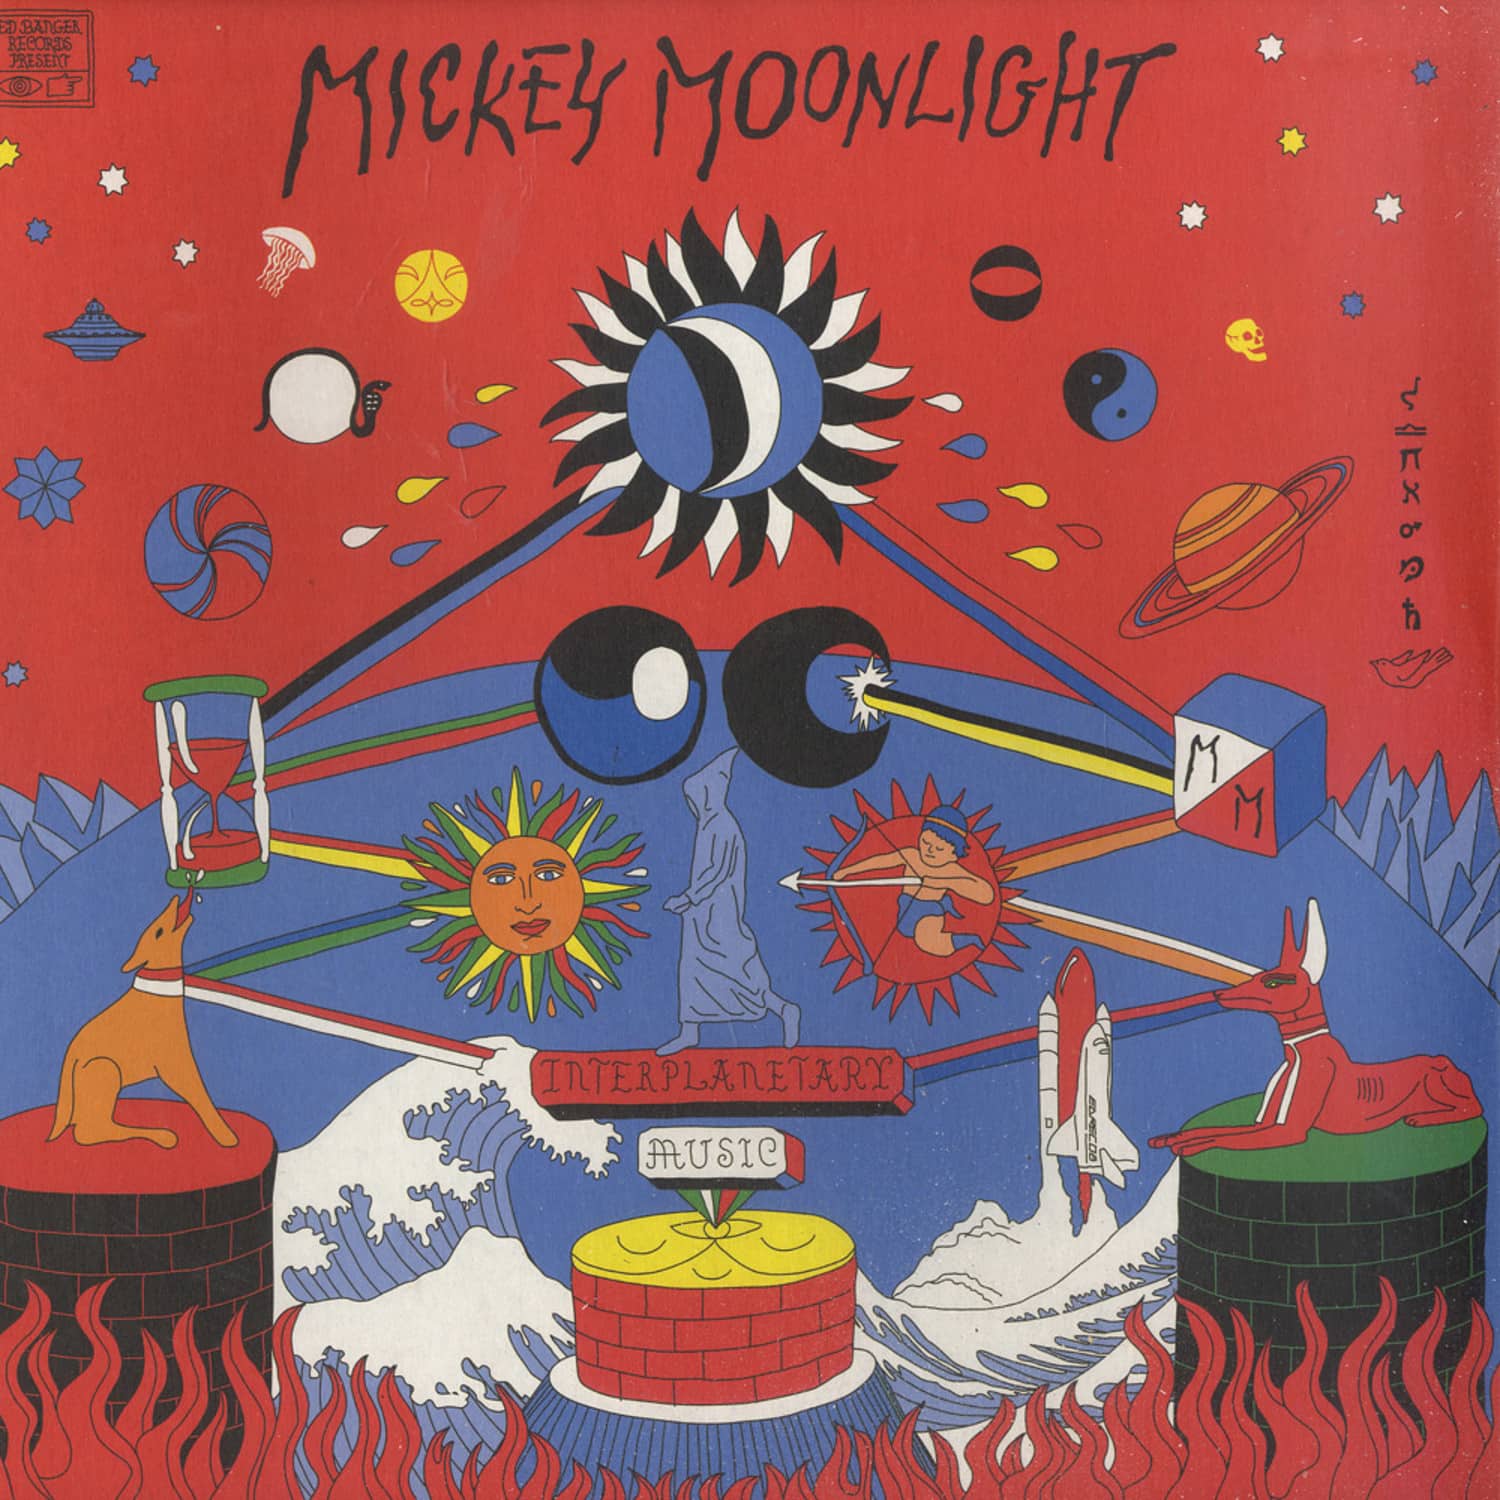 Mickey Moonlight - INTERPLANETARY MUSIC